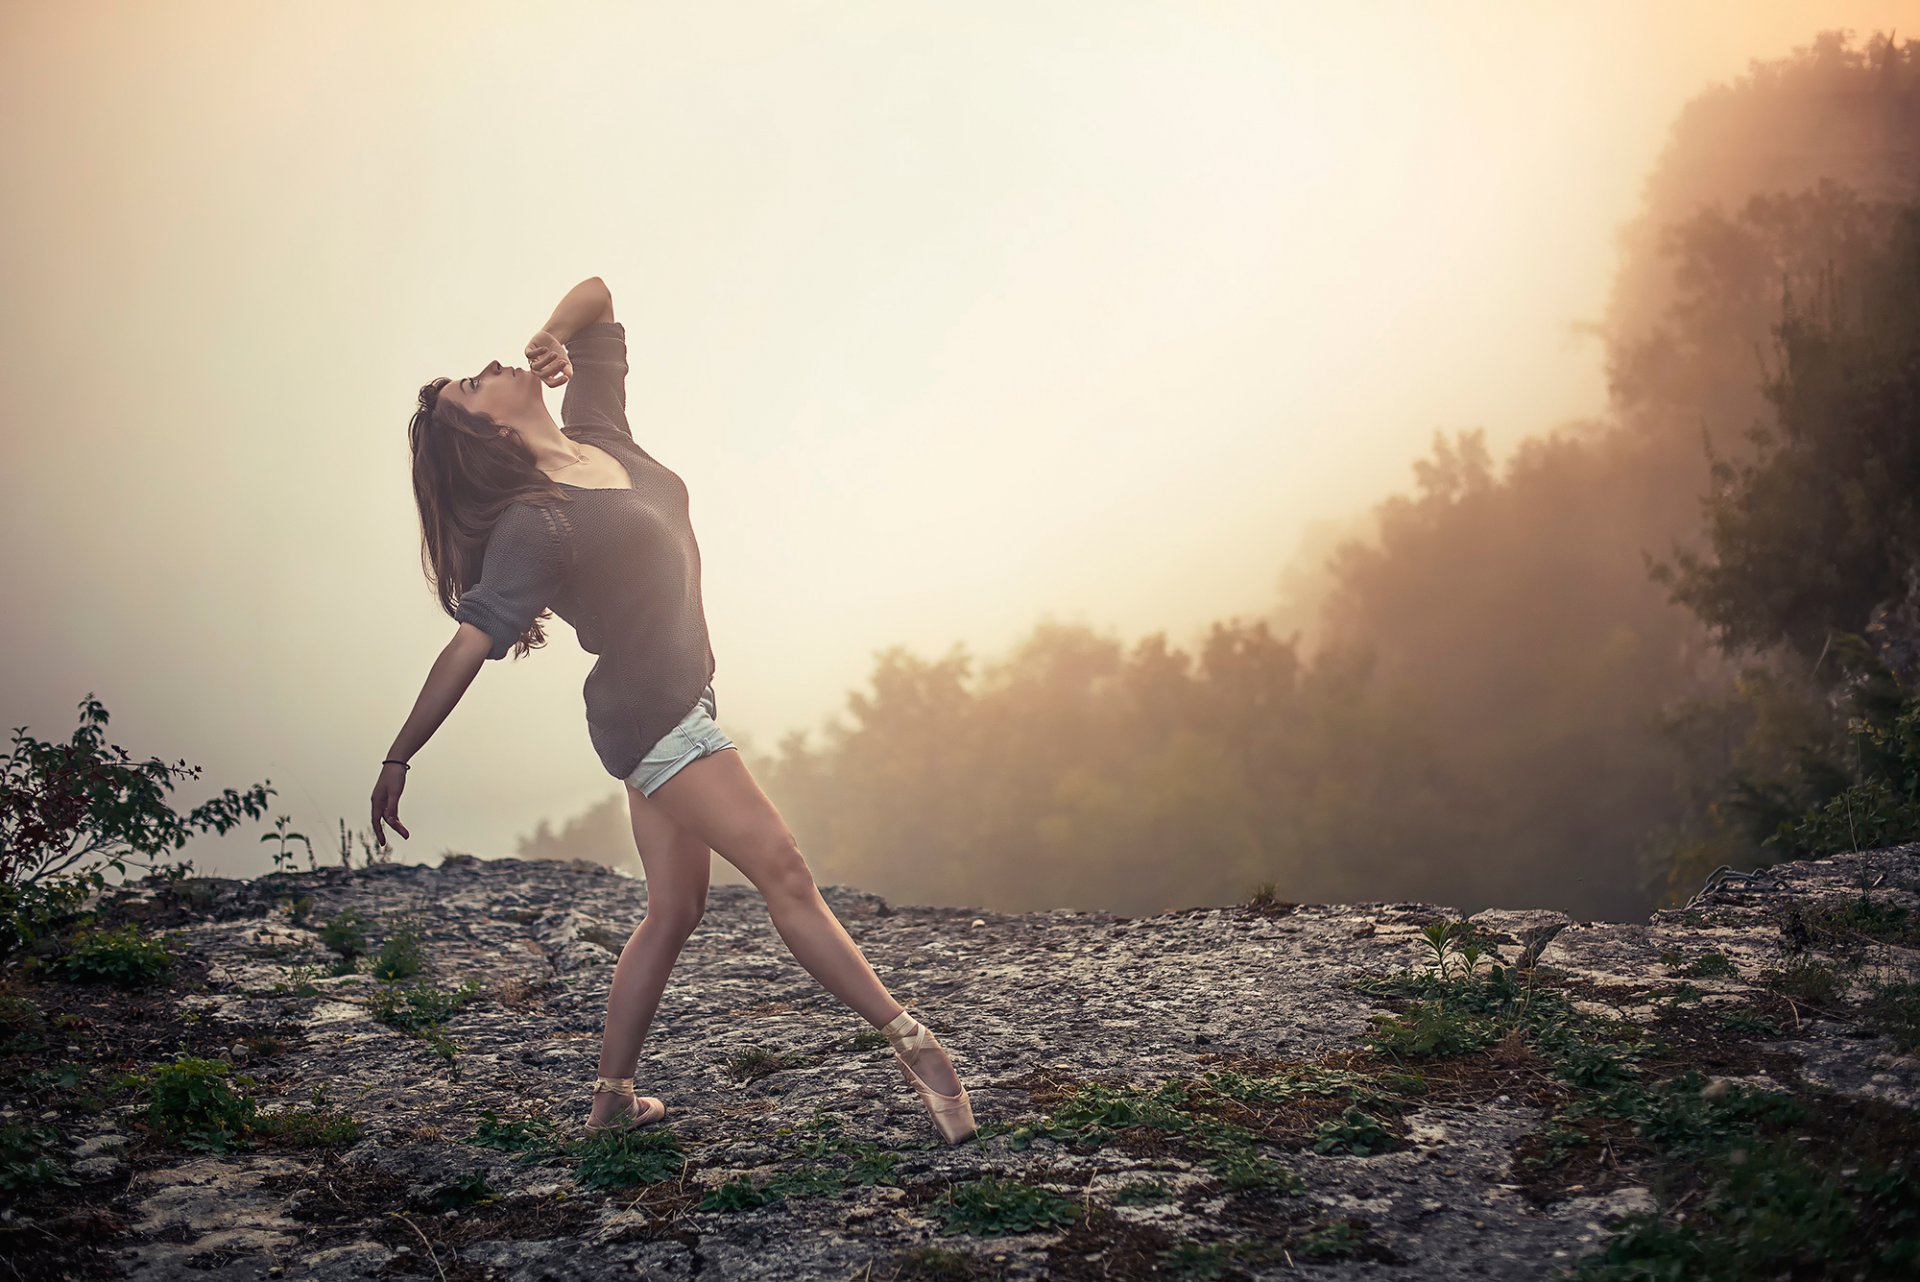 балерина пуанты танец движение туман обрыв на краю